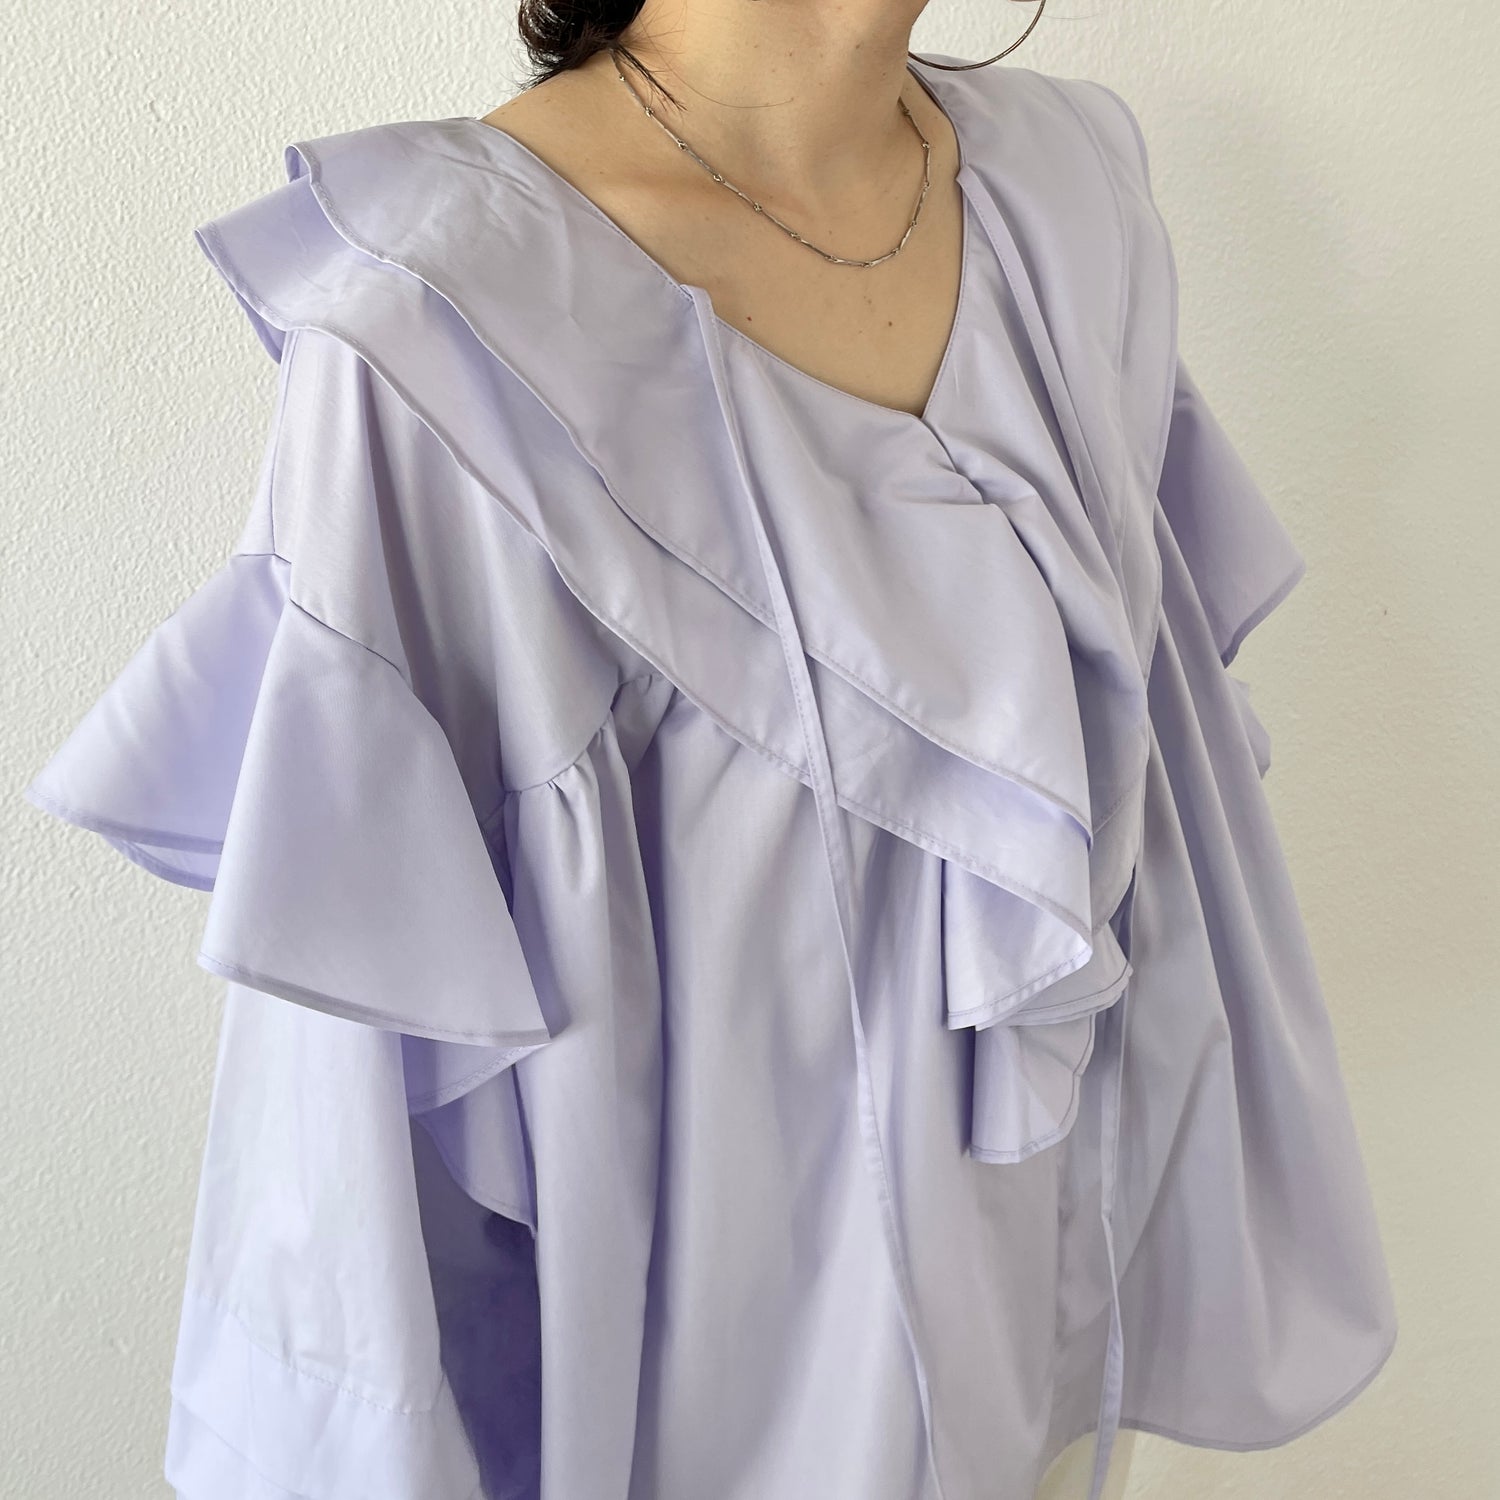 verybarin VB-164 Sleeveless blouse